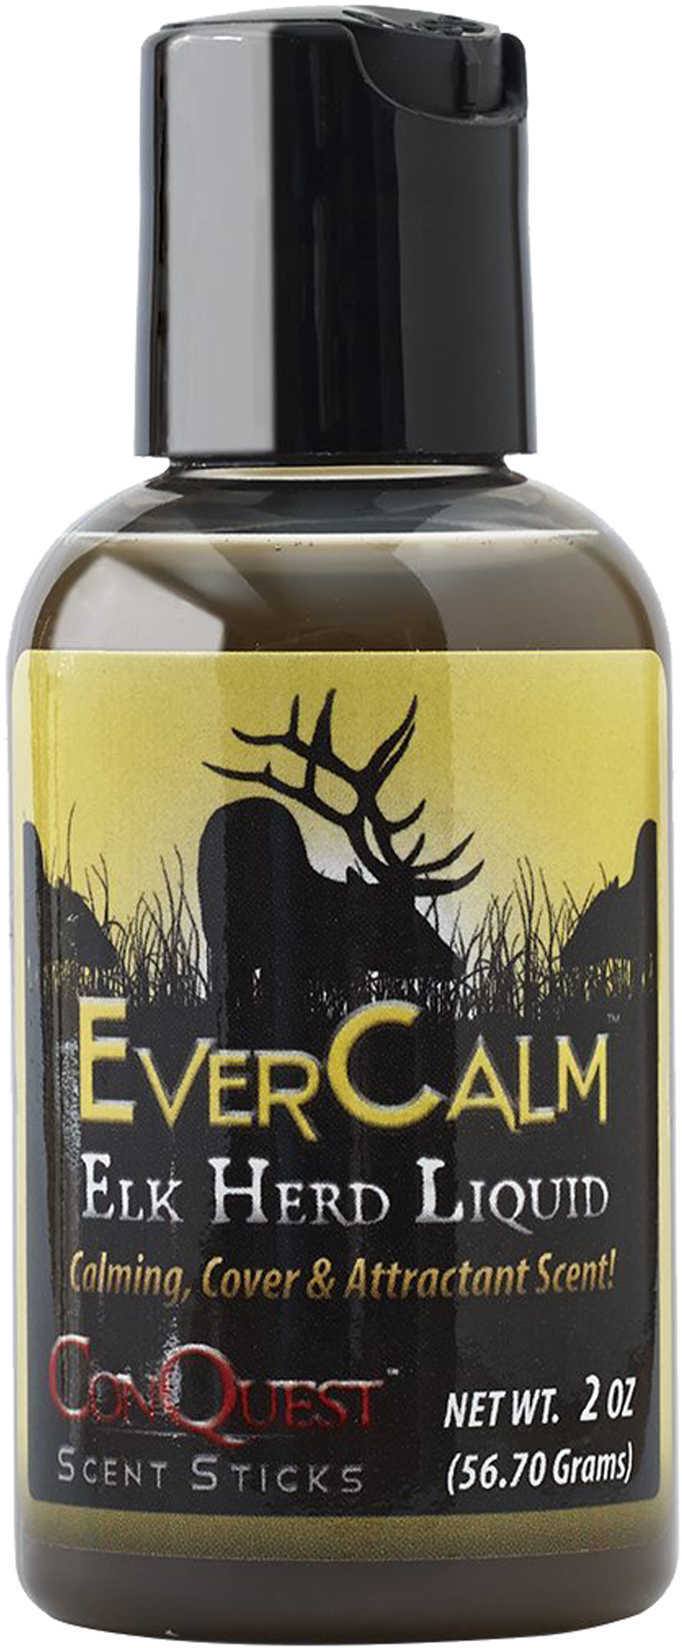 Conquest Scents EverCalm Elk Heard Bottle 1215